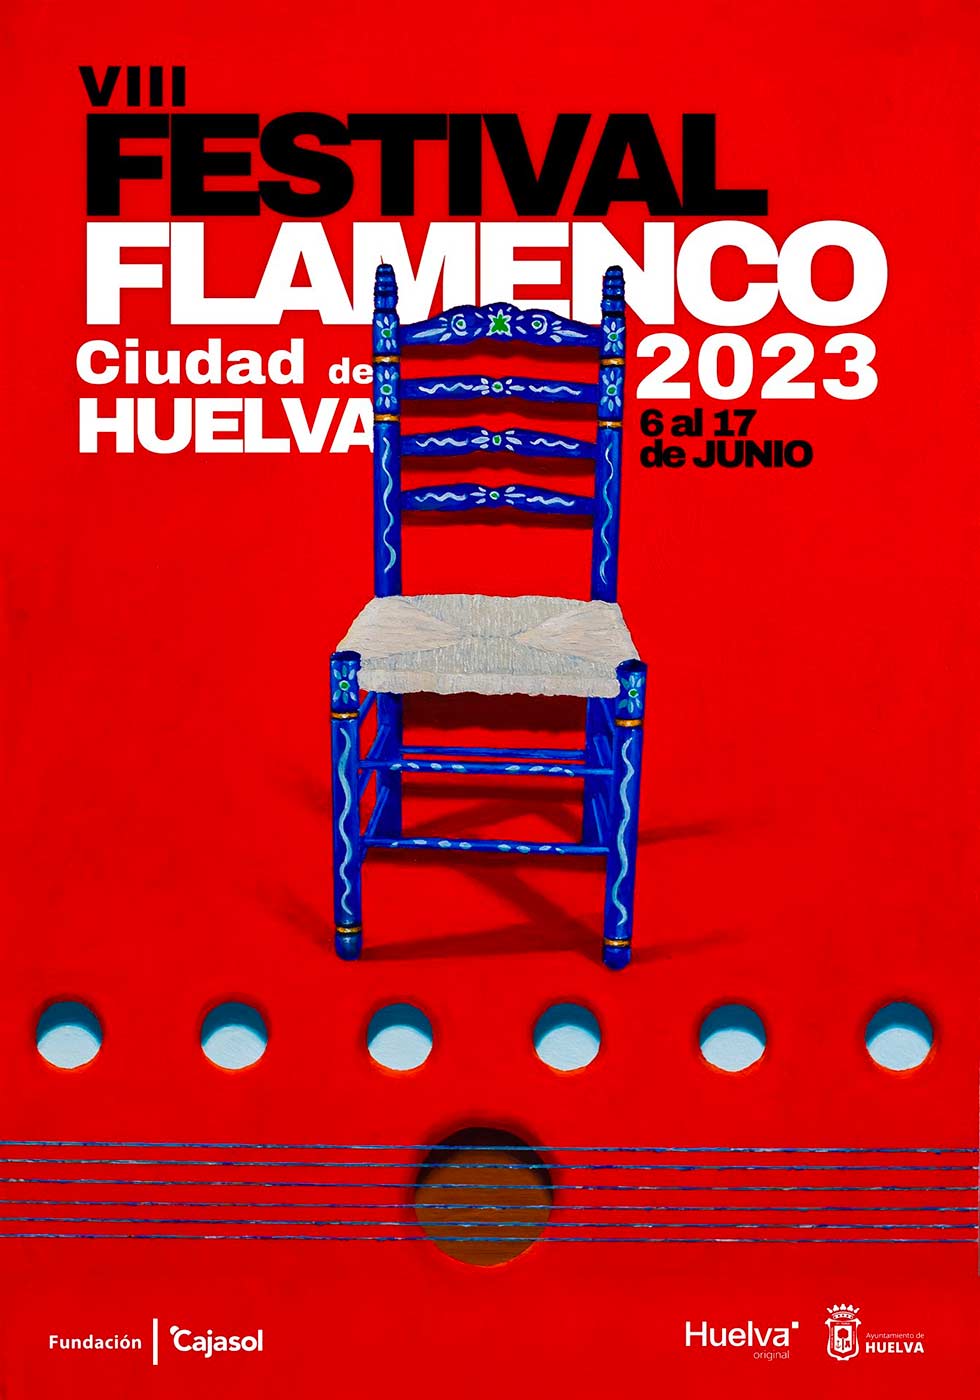 Festival de Flamenco Huelva 2023 Sara Baras Estrella Morente del 6 de junio al 17 2023 Huelva